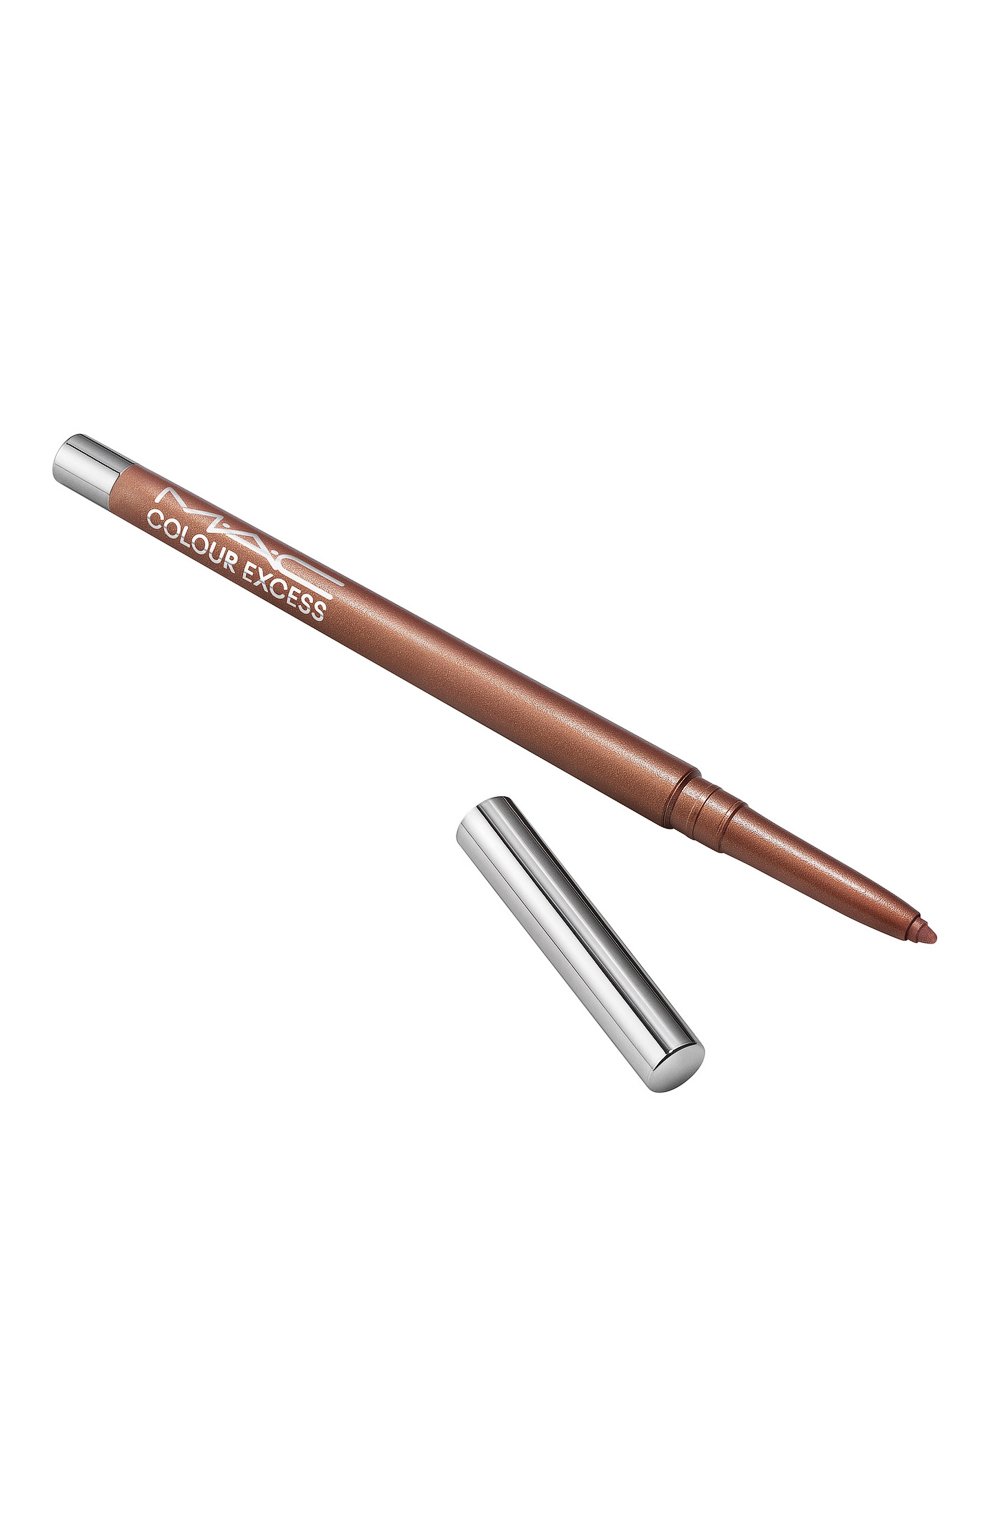 Гелевый карандаш для глаз colour excess gel, оттенок skip the waitlist (0.35g) MAC  цвета, арт. SLJ4-04 | Фото 4